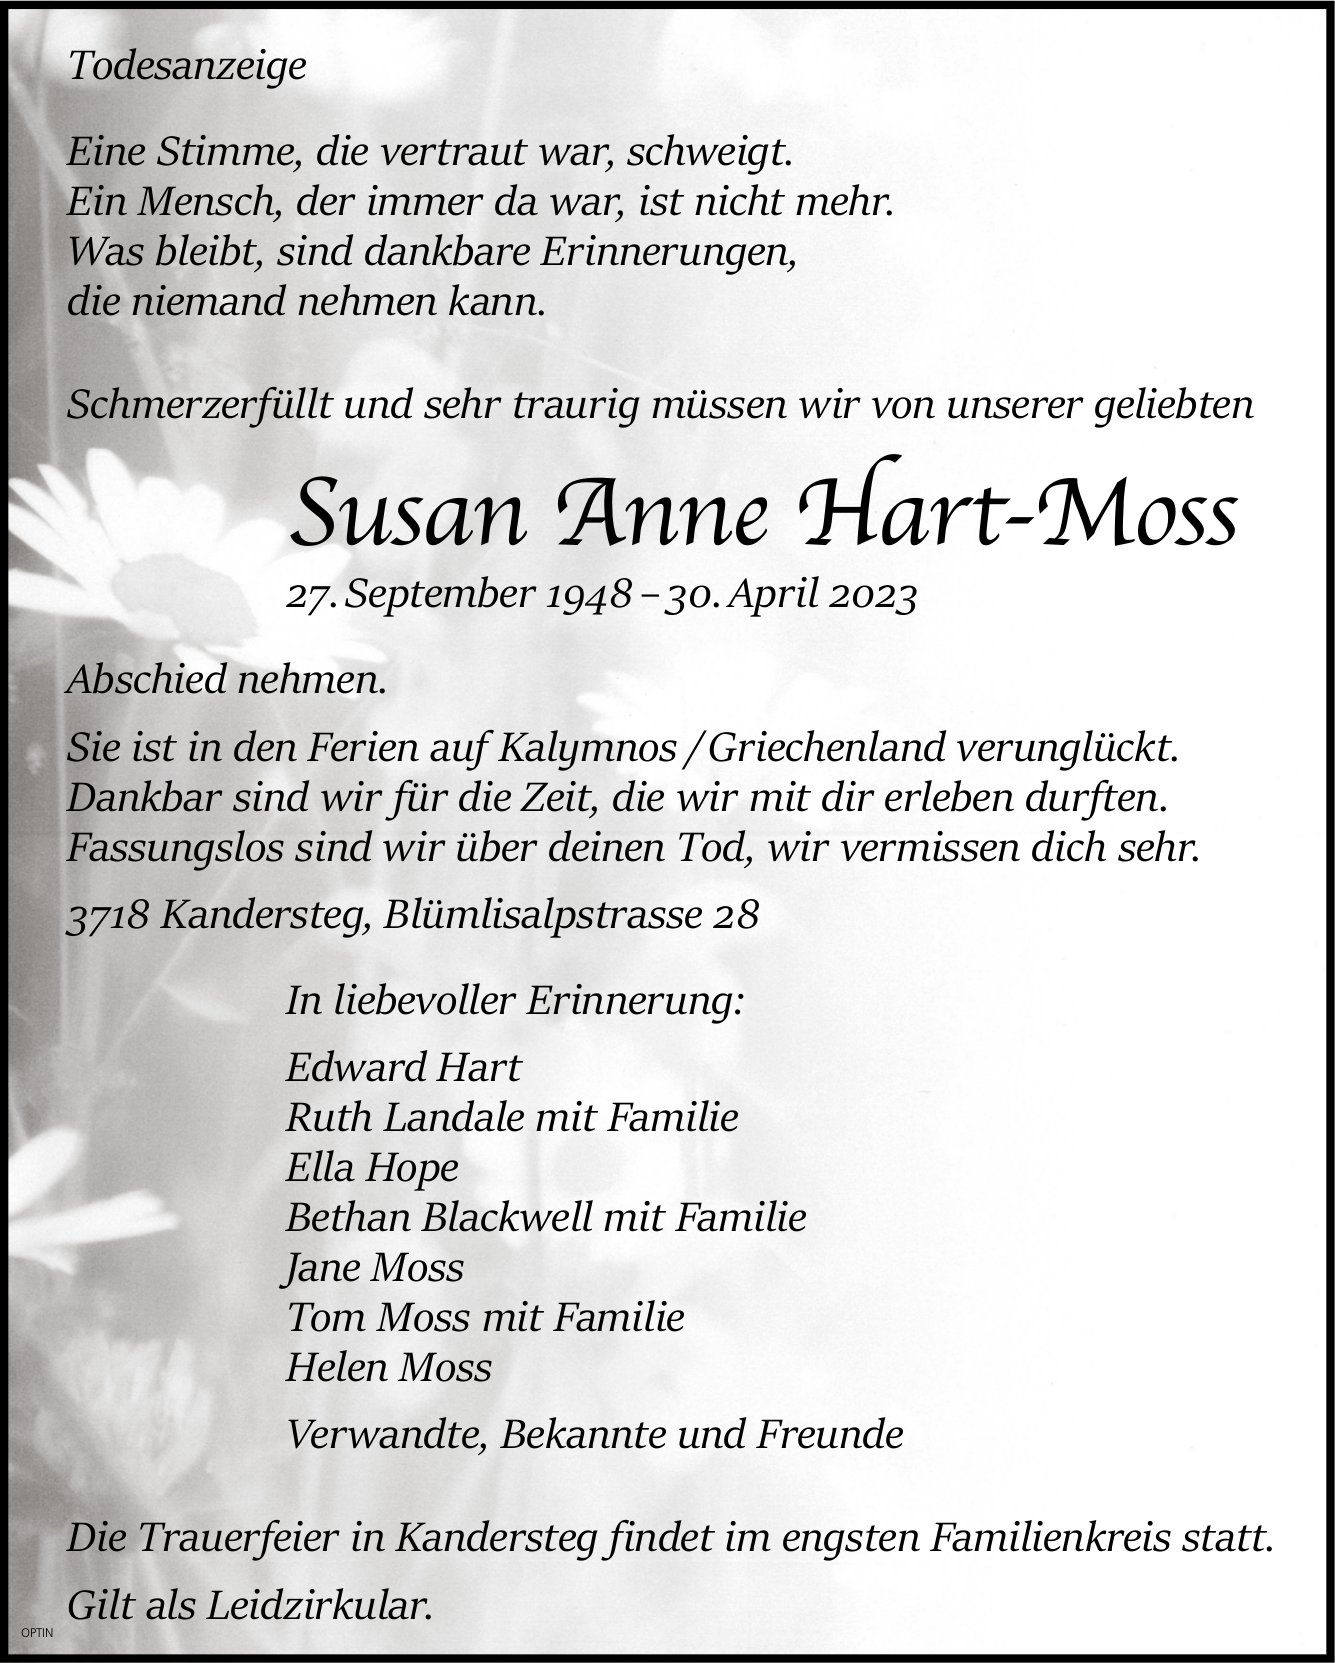 Susan Anne Hart-Moss, April 2023 / TA